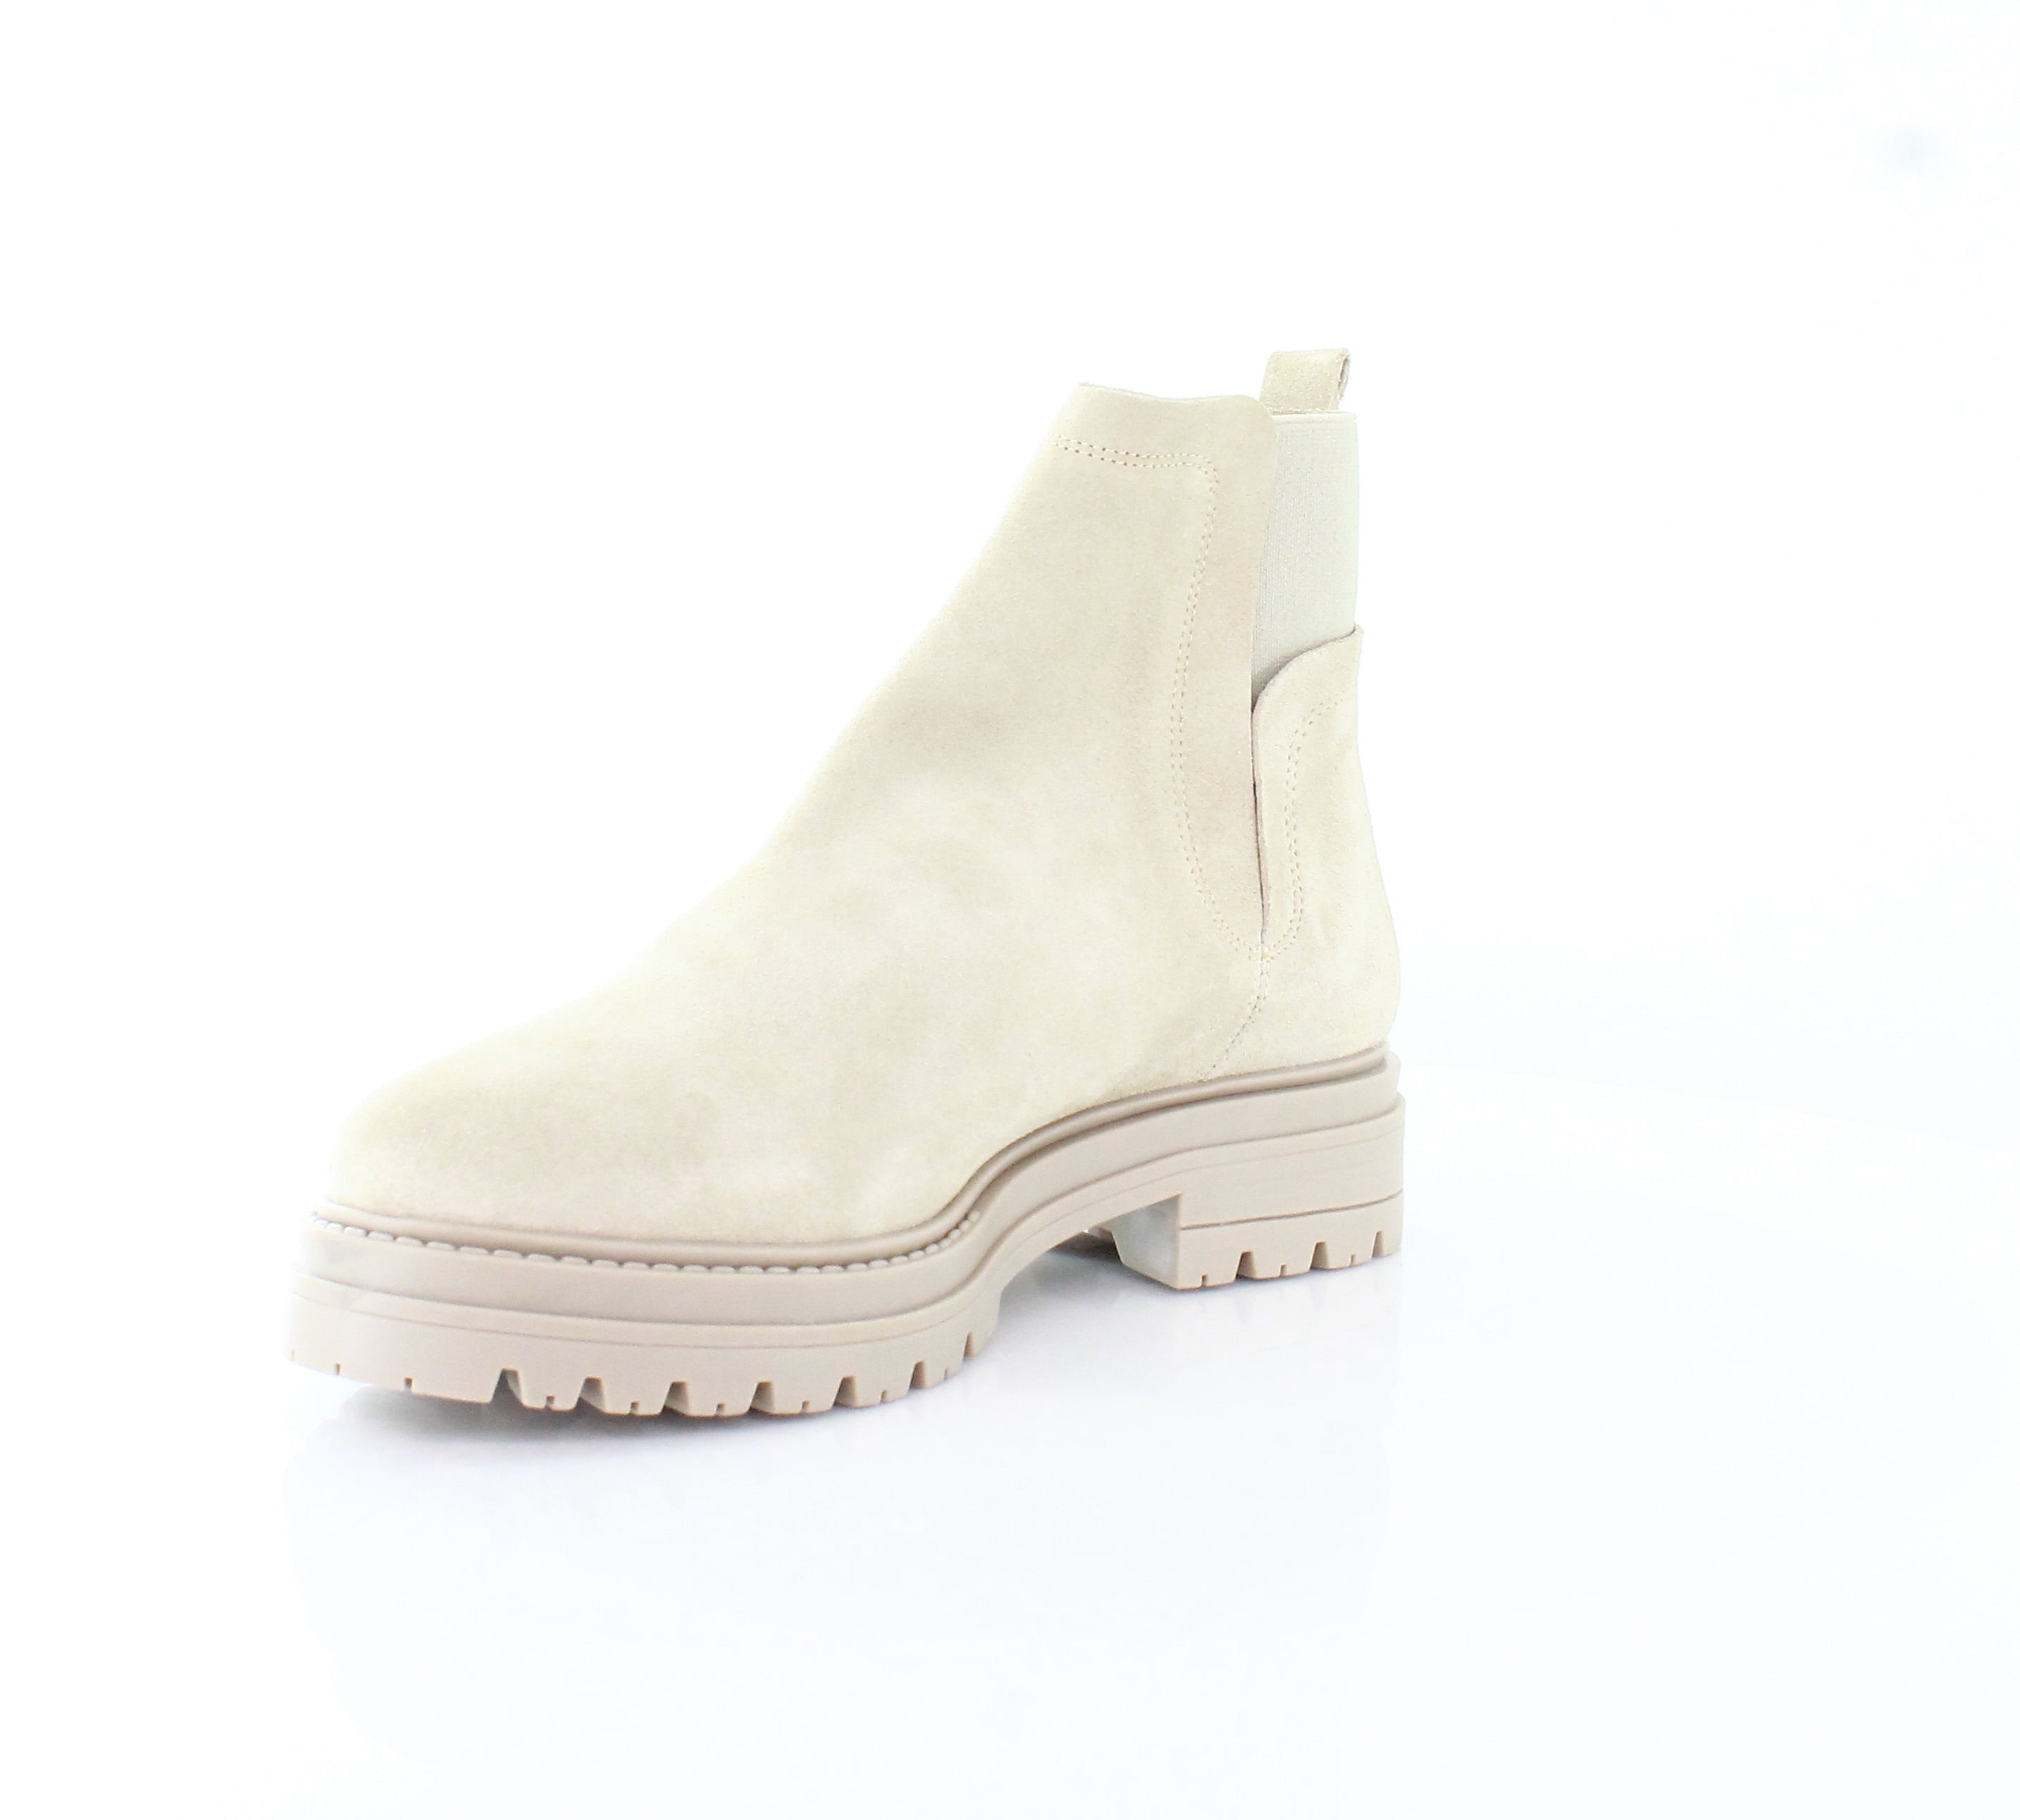 Steve Madden Moira Women's Boots Sand Suede Size 6 M